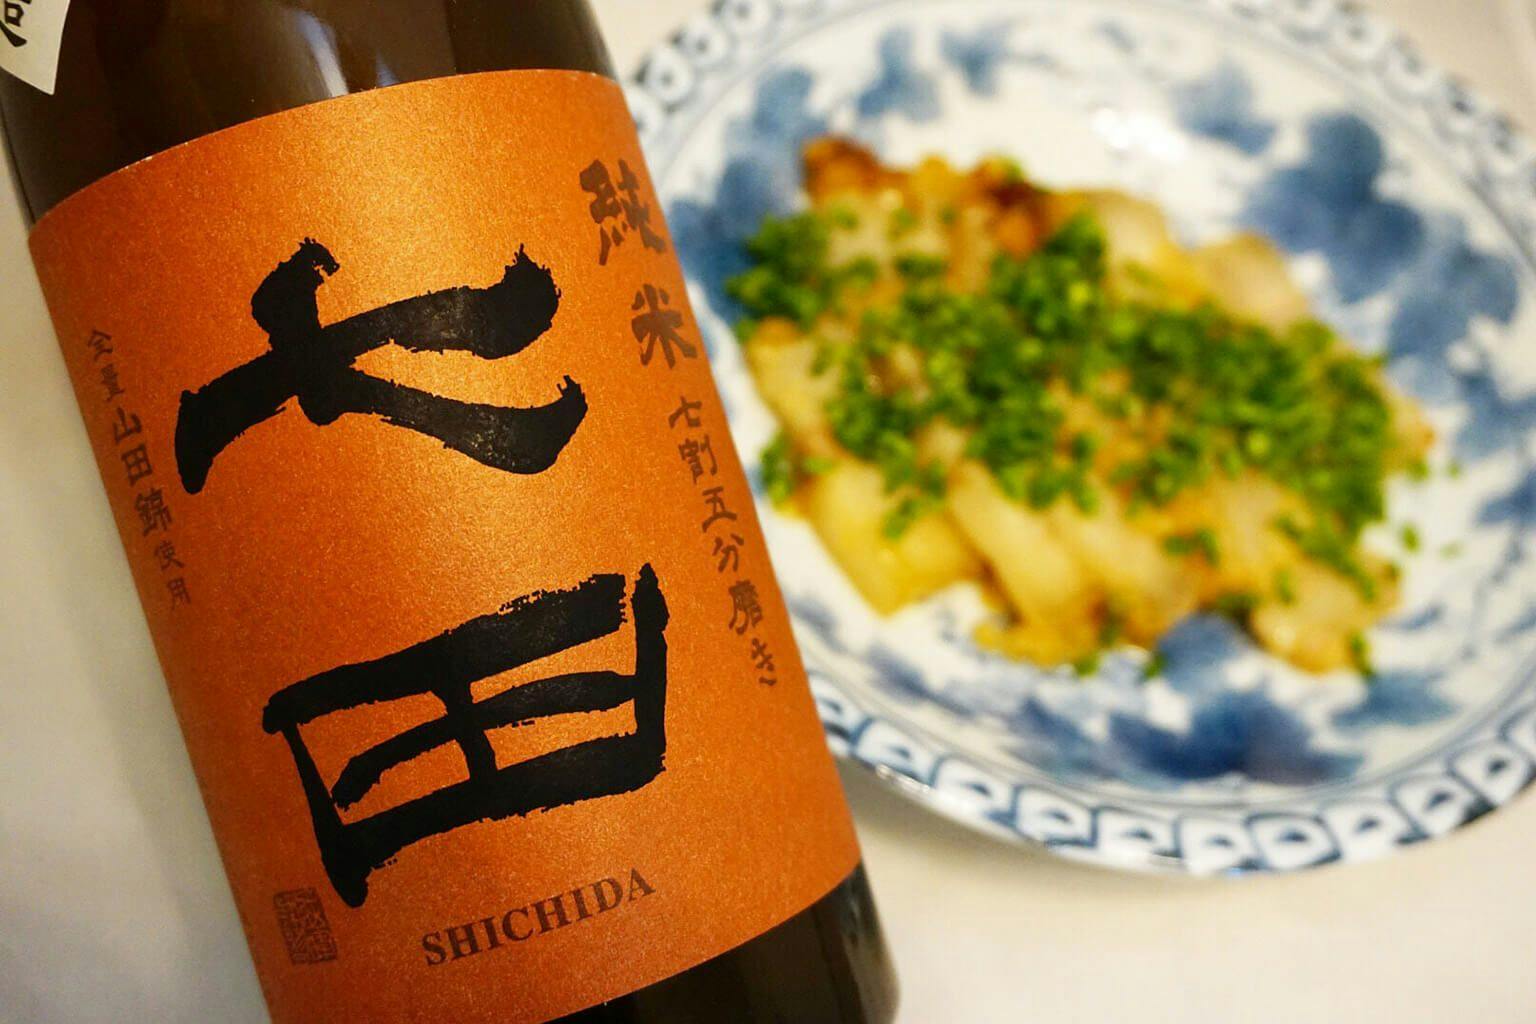 Tippsy Recipe & Shichida “75”